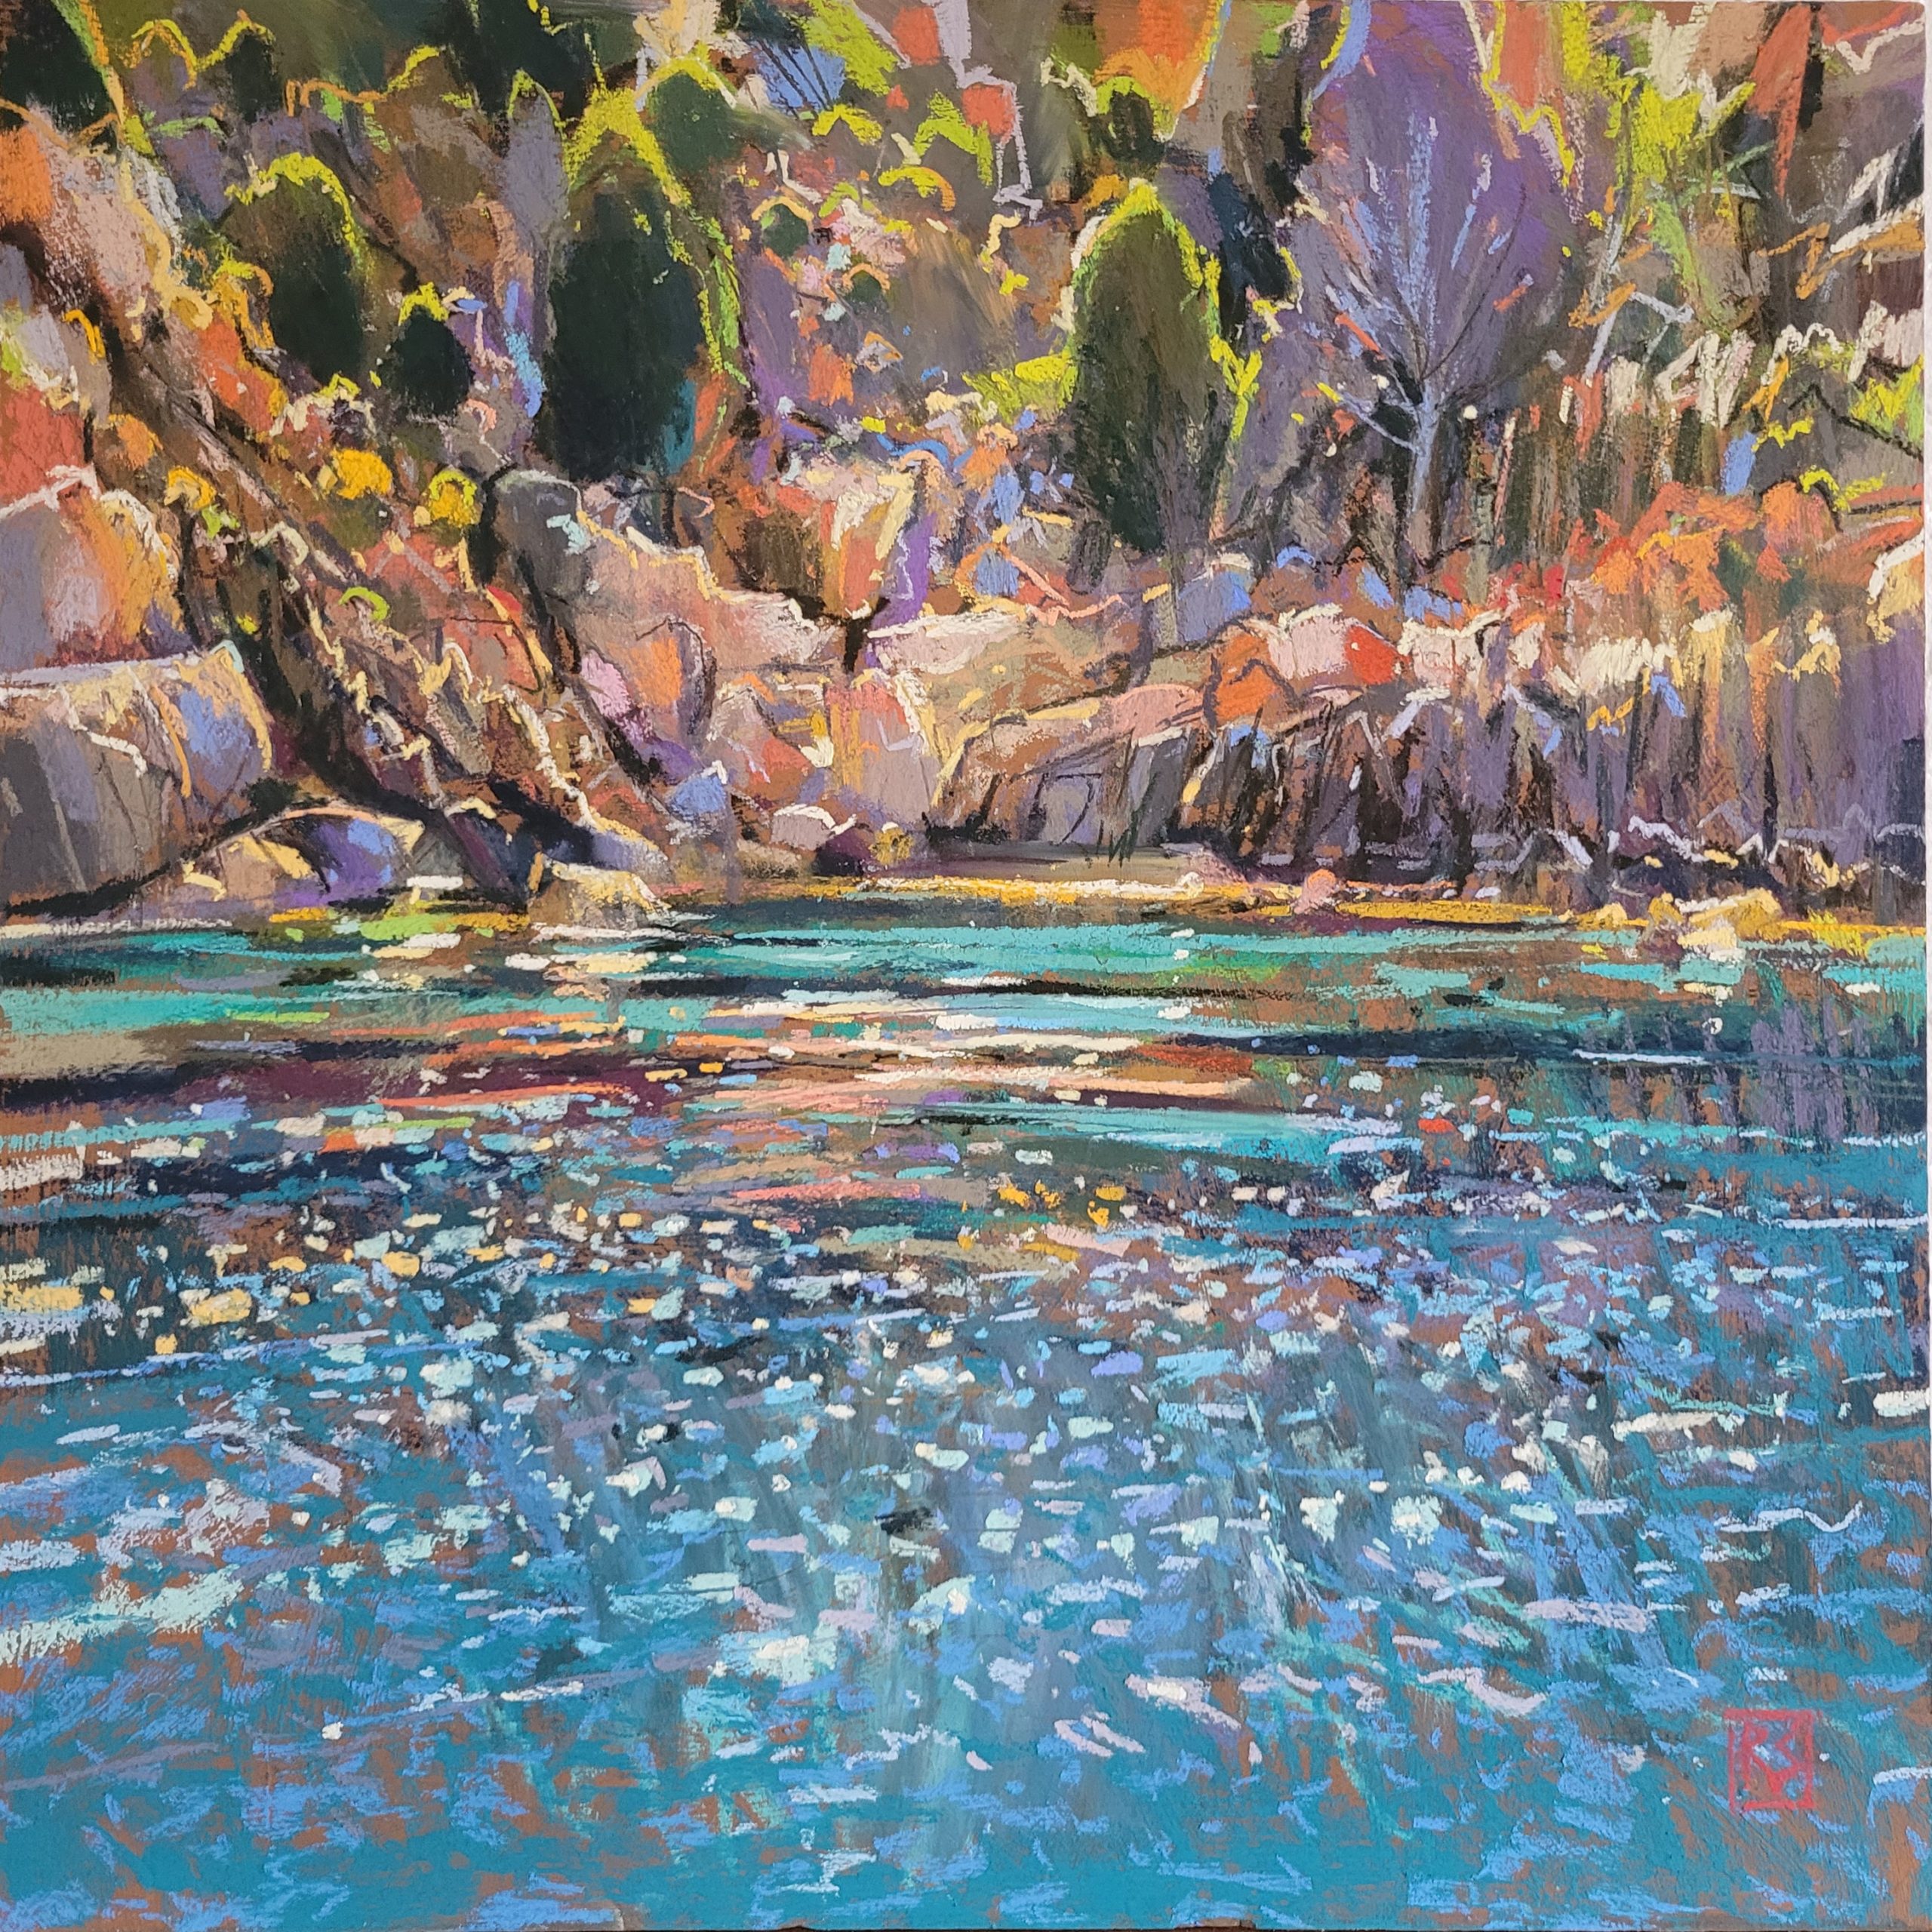 Richard Suckling, "Sardinian Shimmer," 2022, pastels on primed board, 60 x 60 cm.